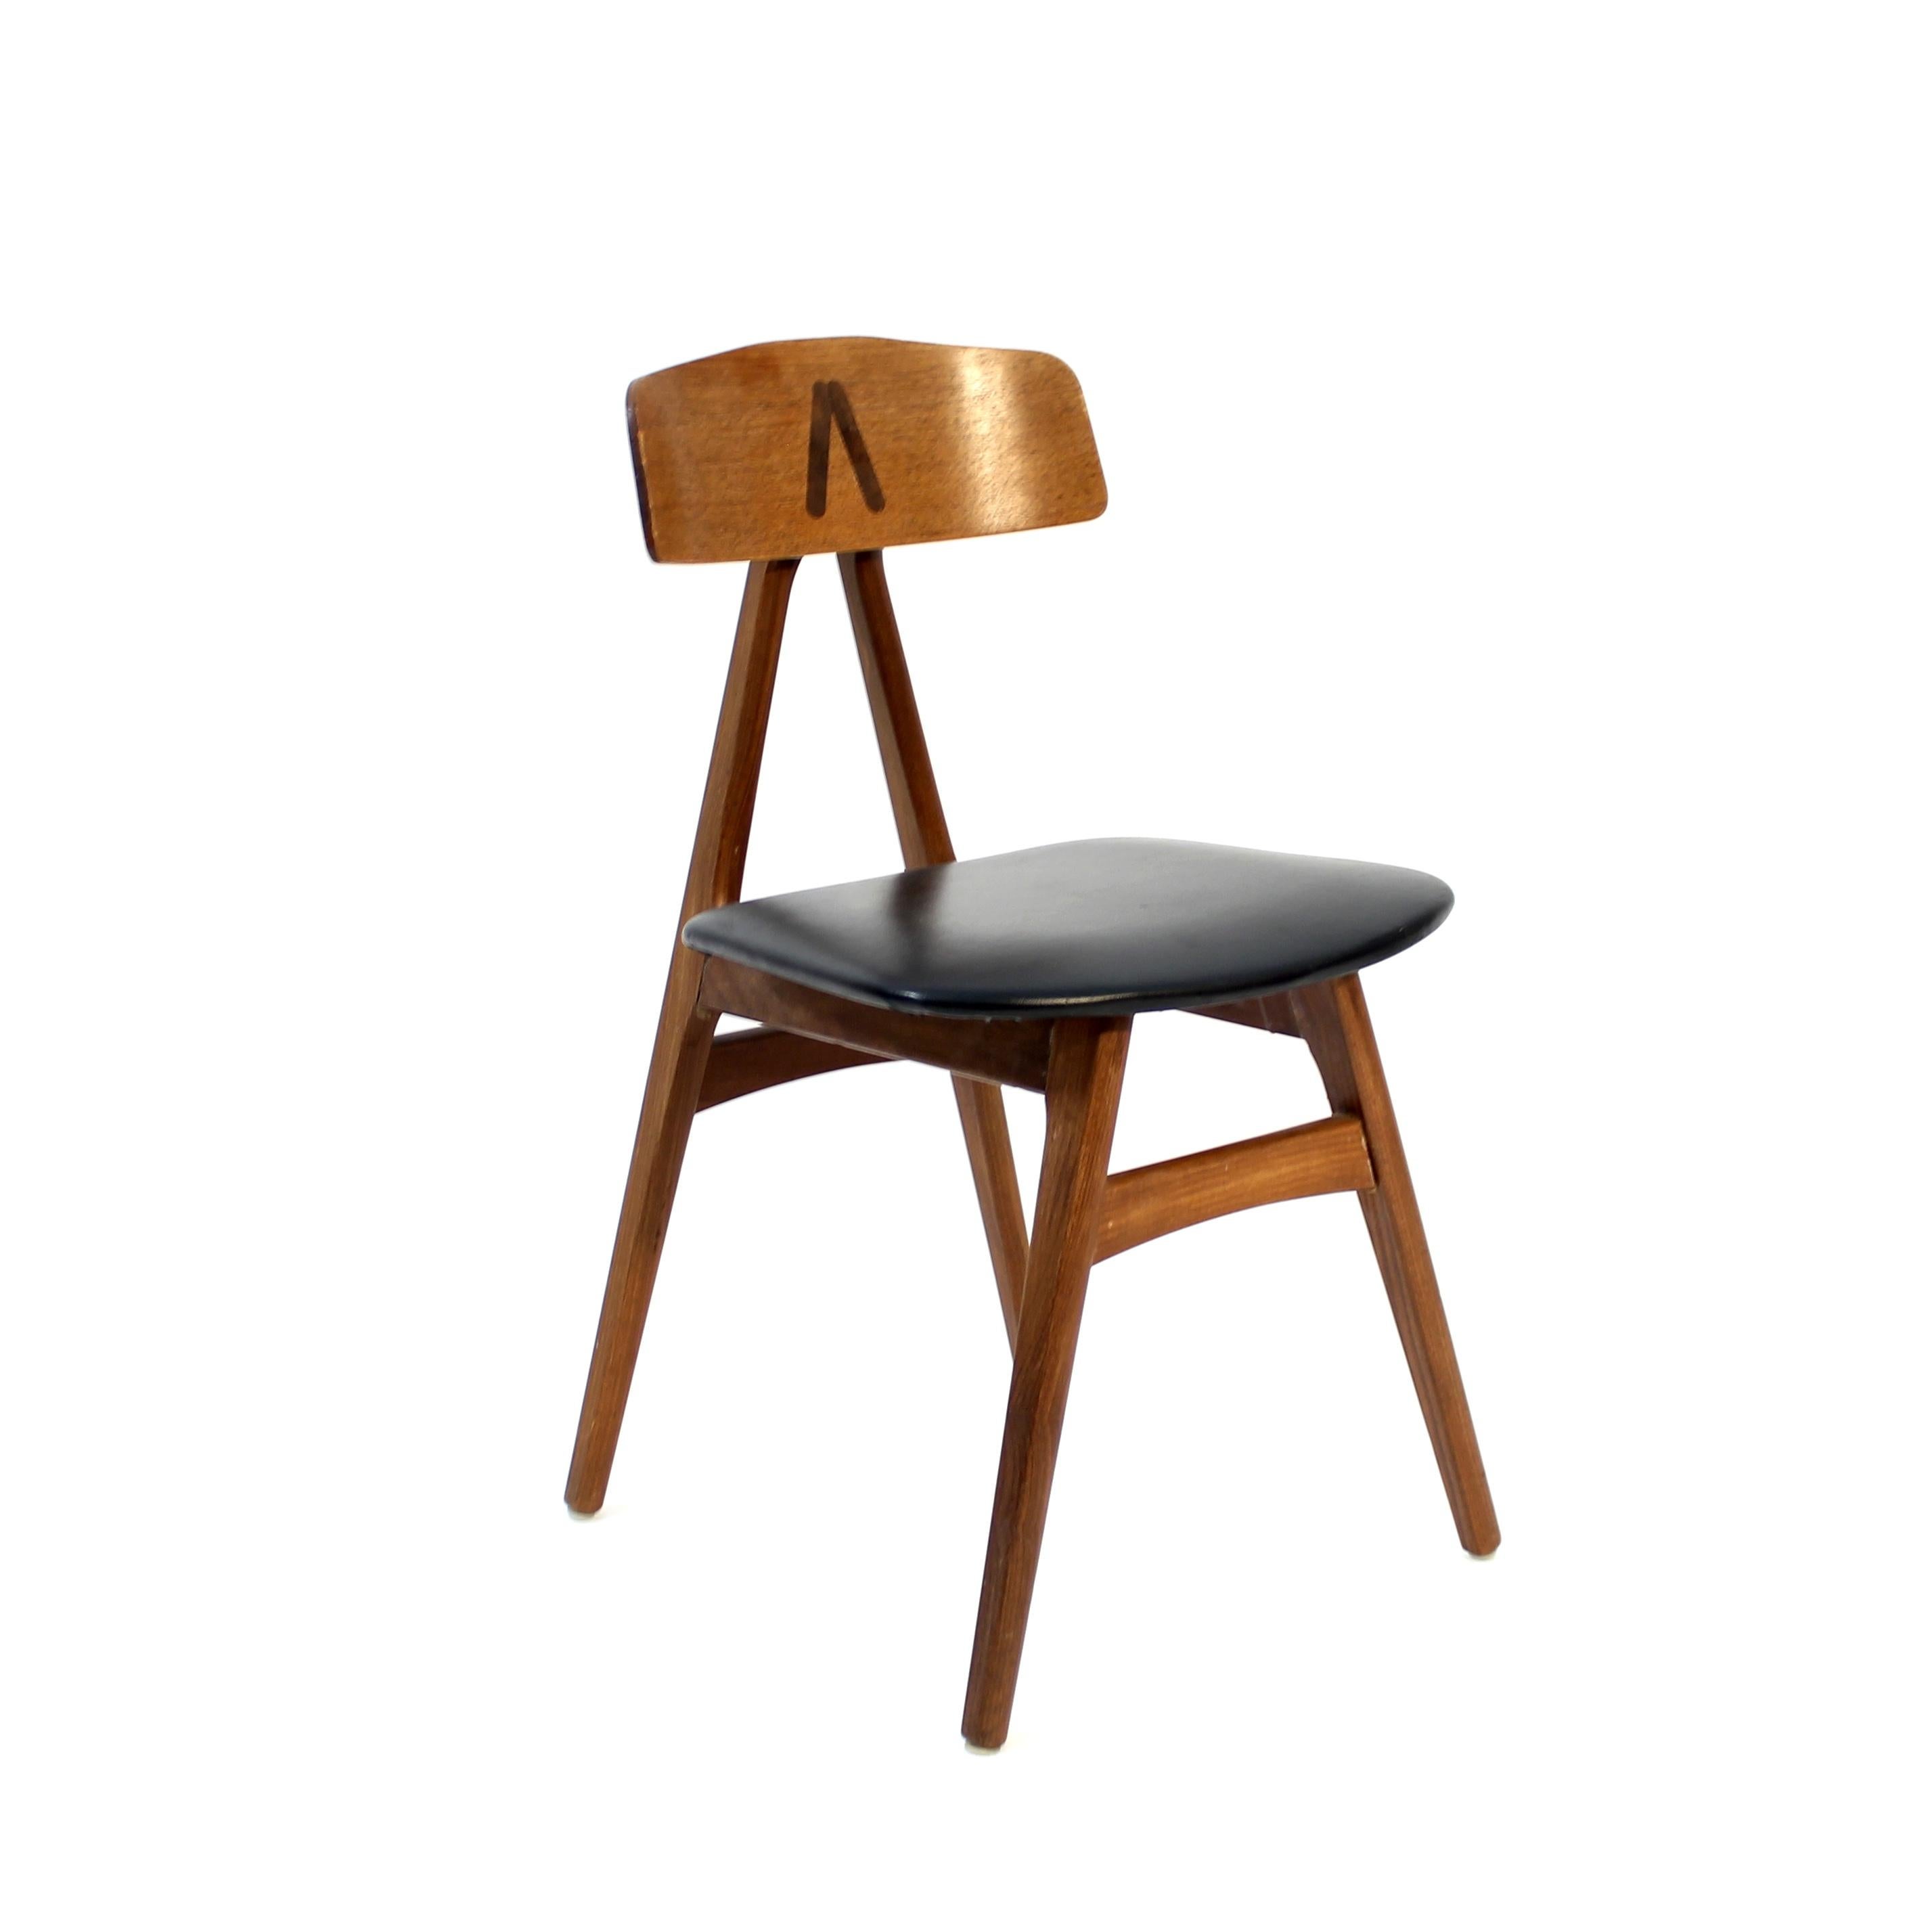 Scandinavian Modern Bengt Ruda, Nizza teak chair for IKEA, 1959 For Sale